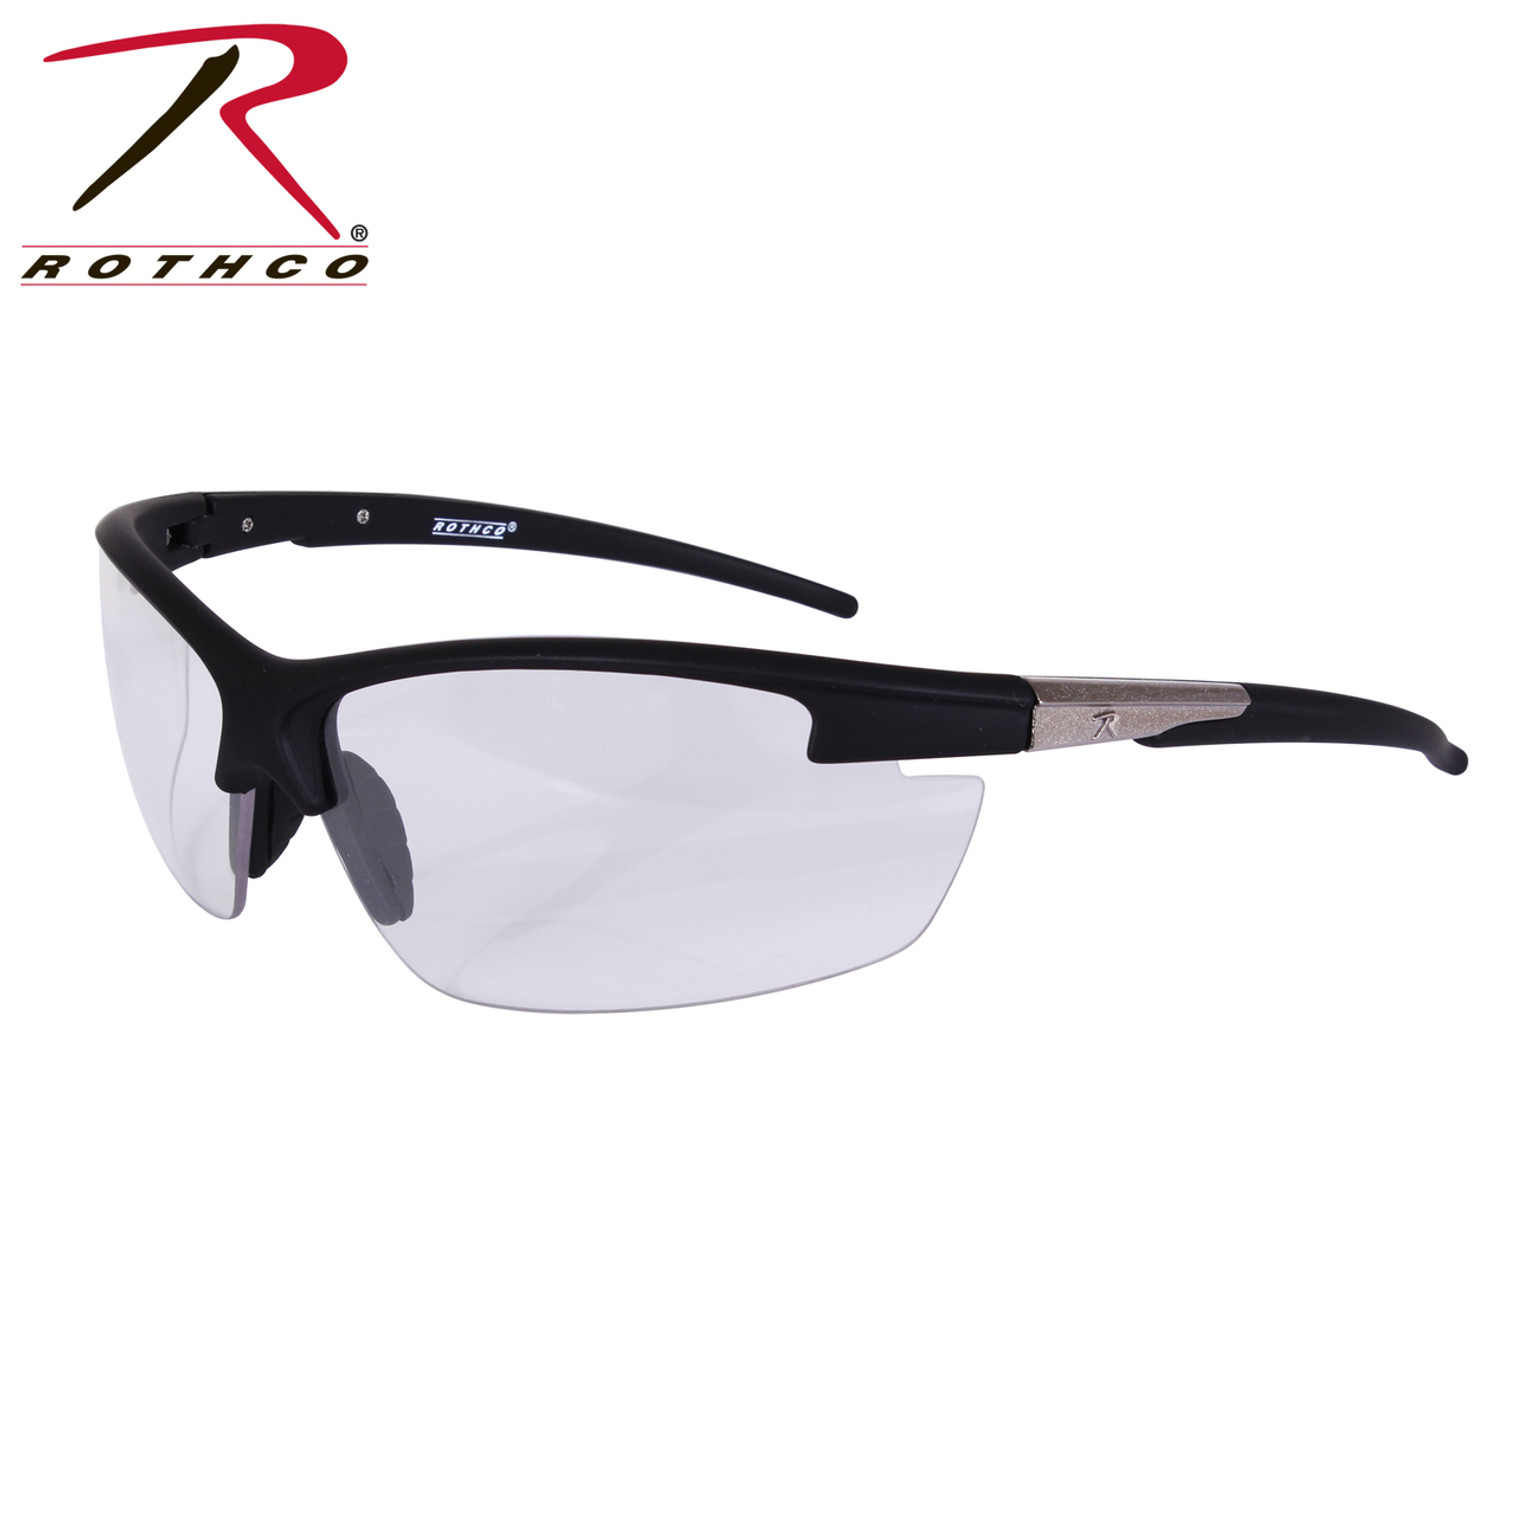 Rothco AR-7 Sport Glasses - Black/Clear